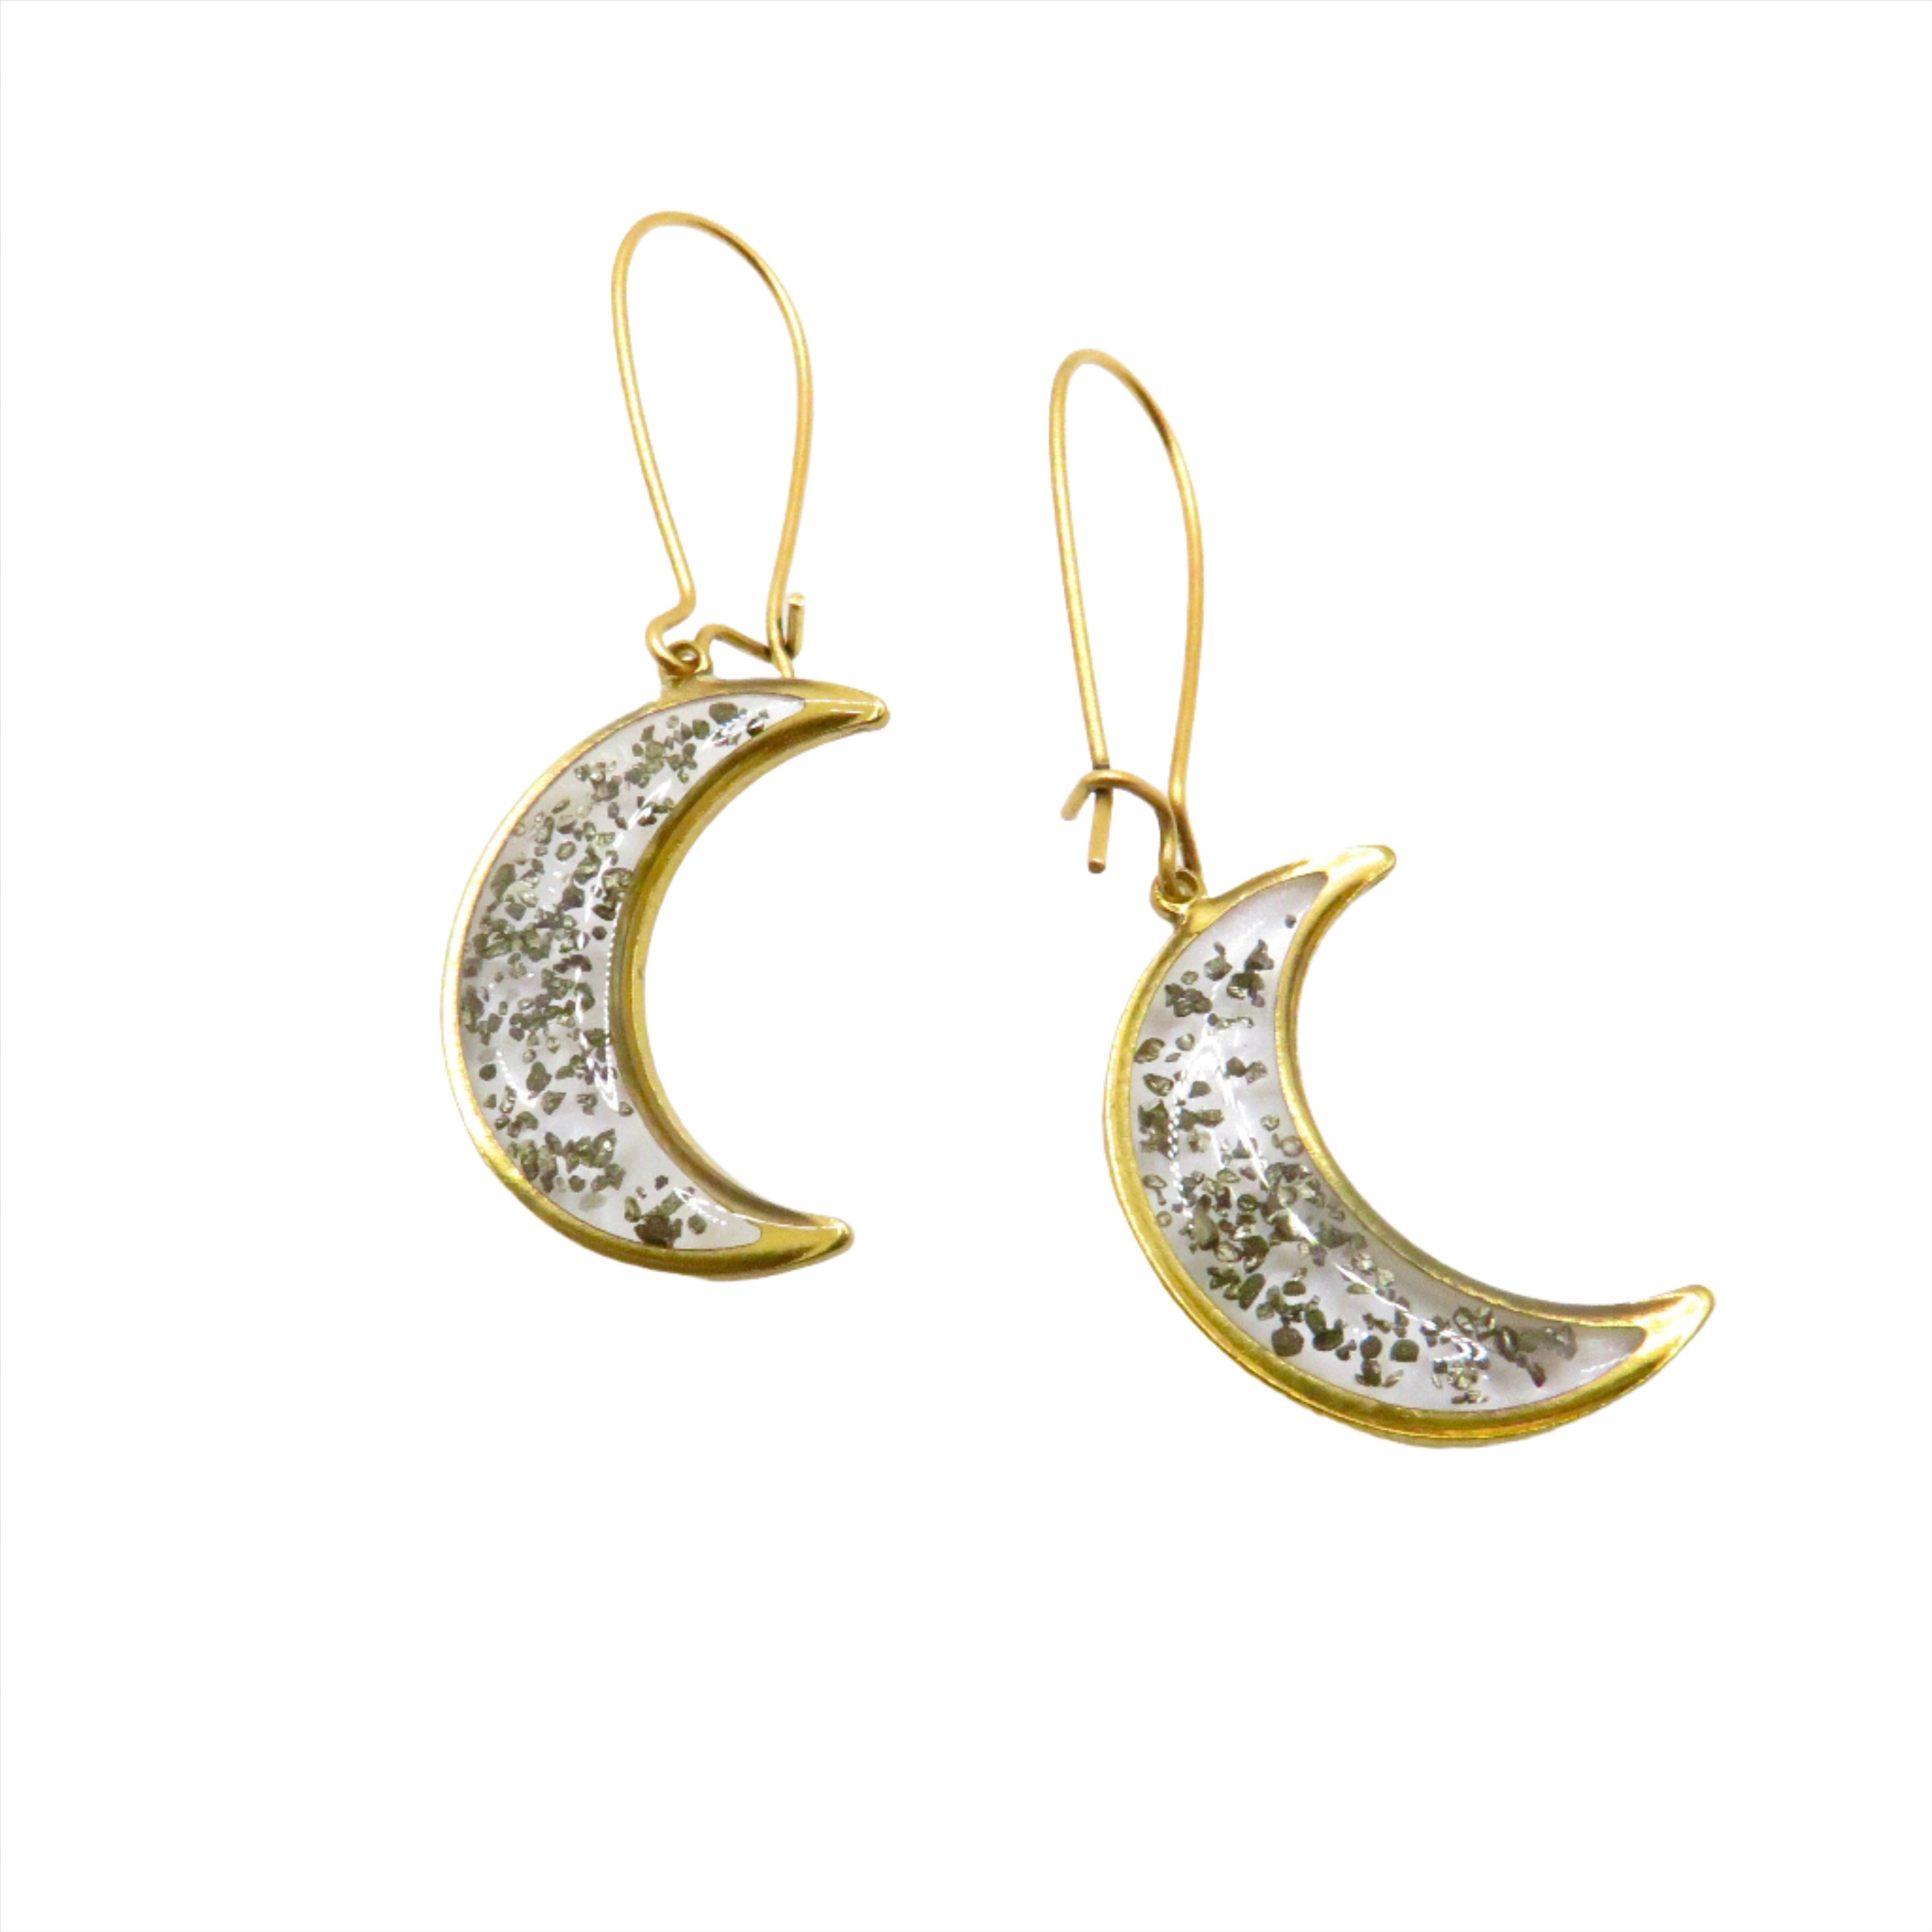 Scattered Pyrite Moon Earrings